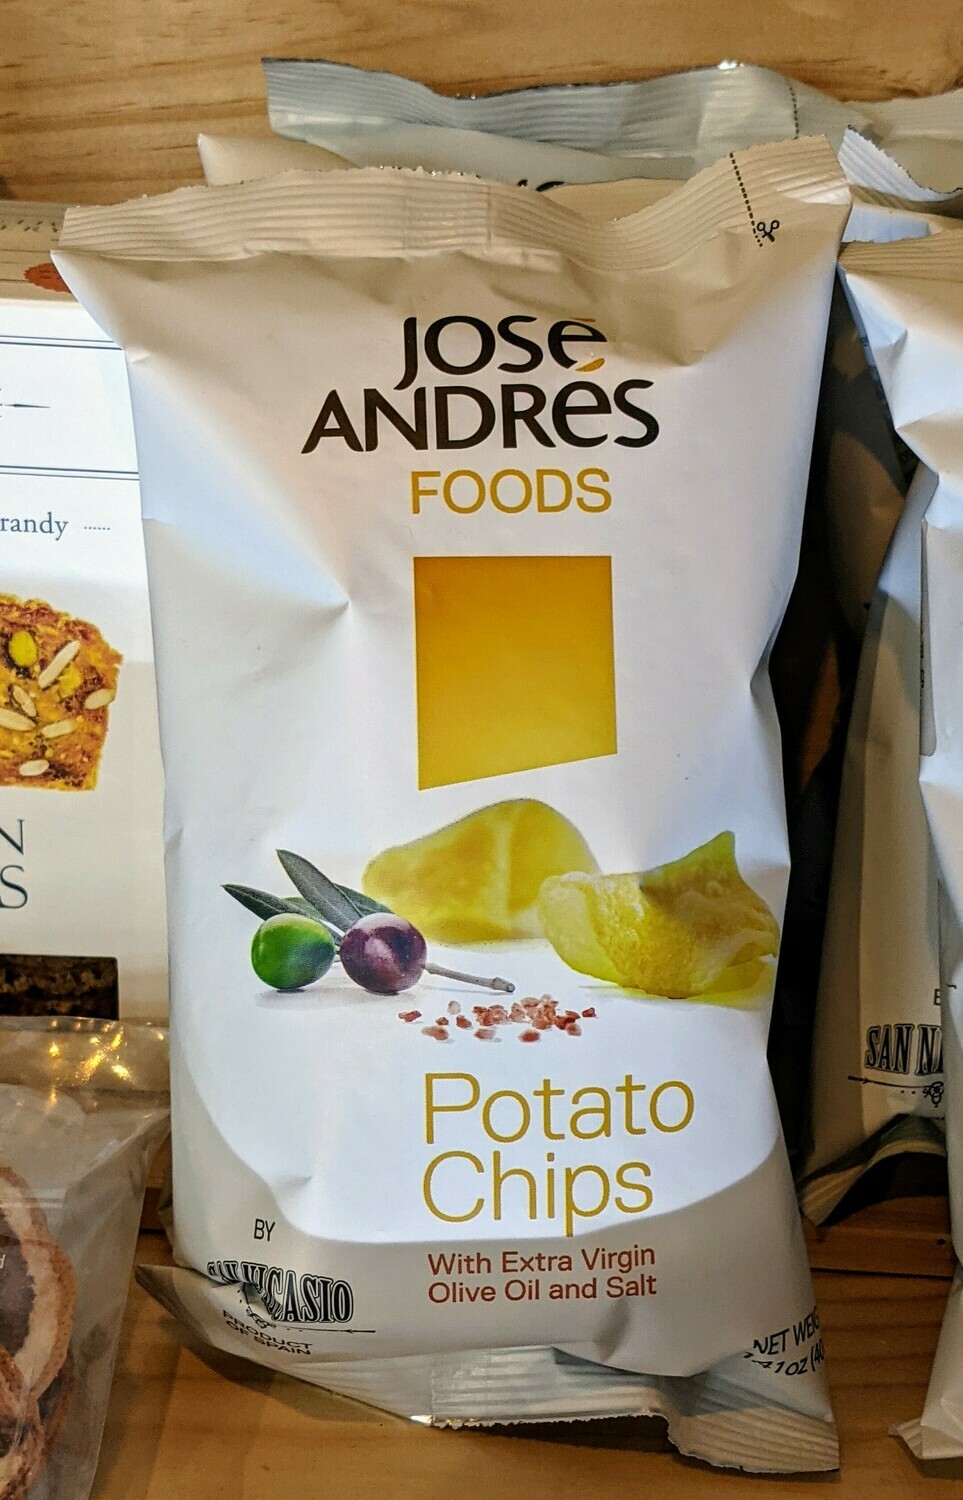 José Andrés Potato Chips (1.41oz)